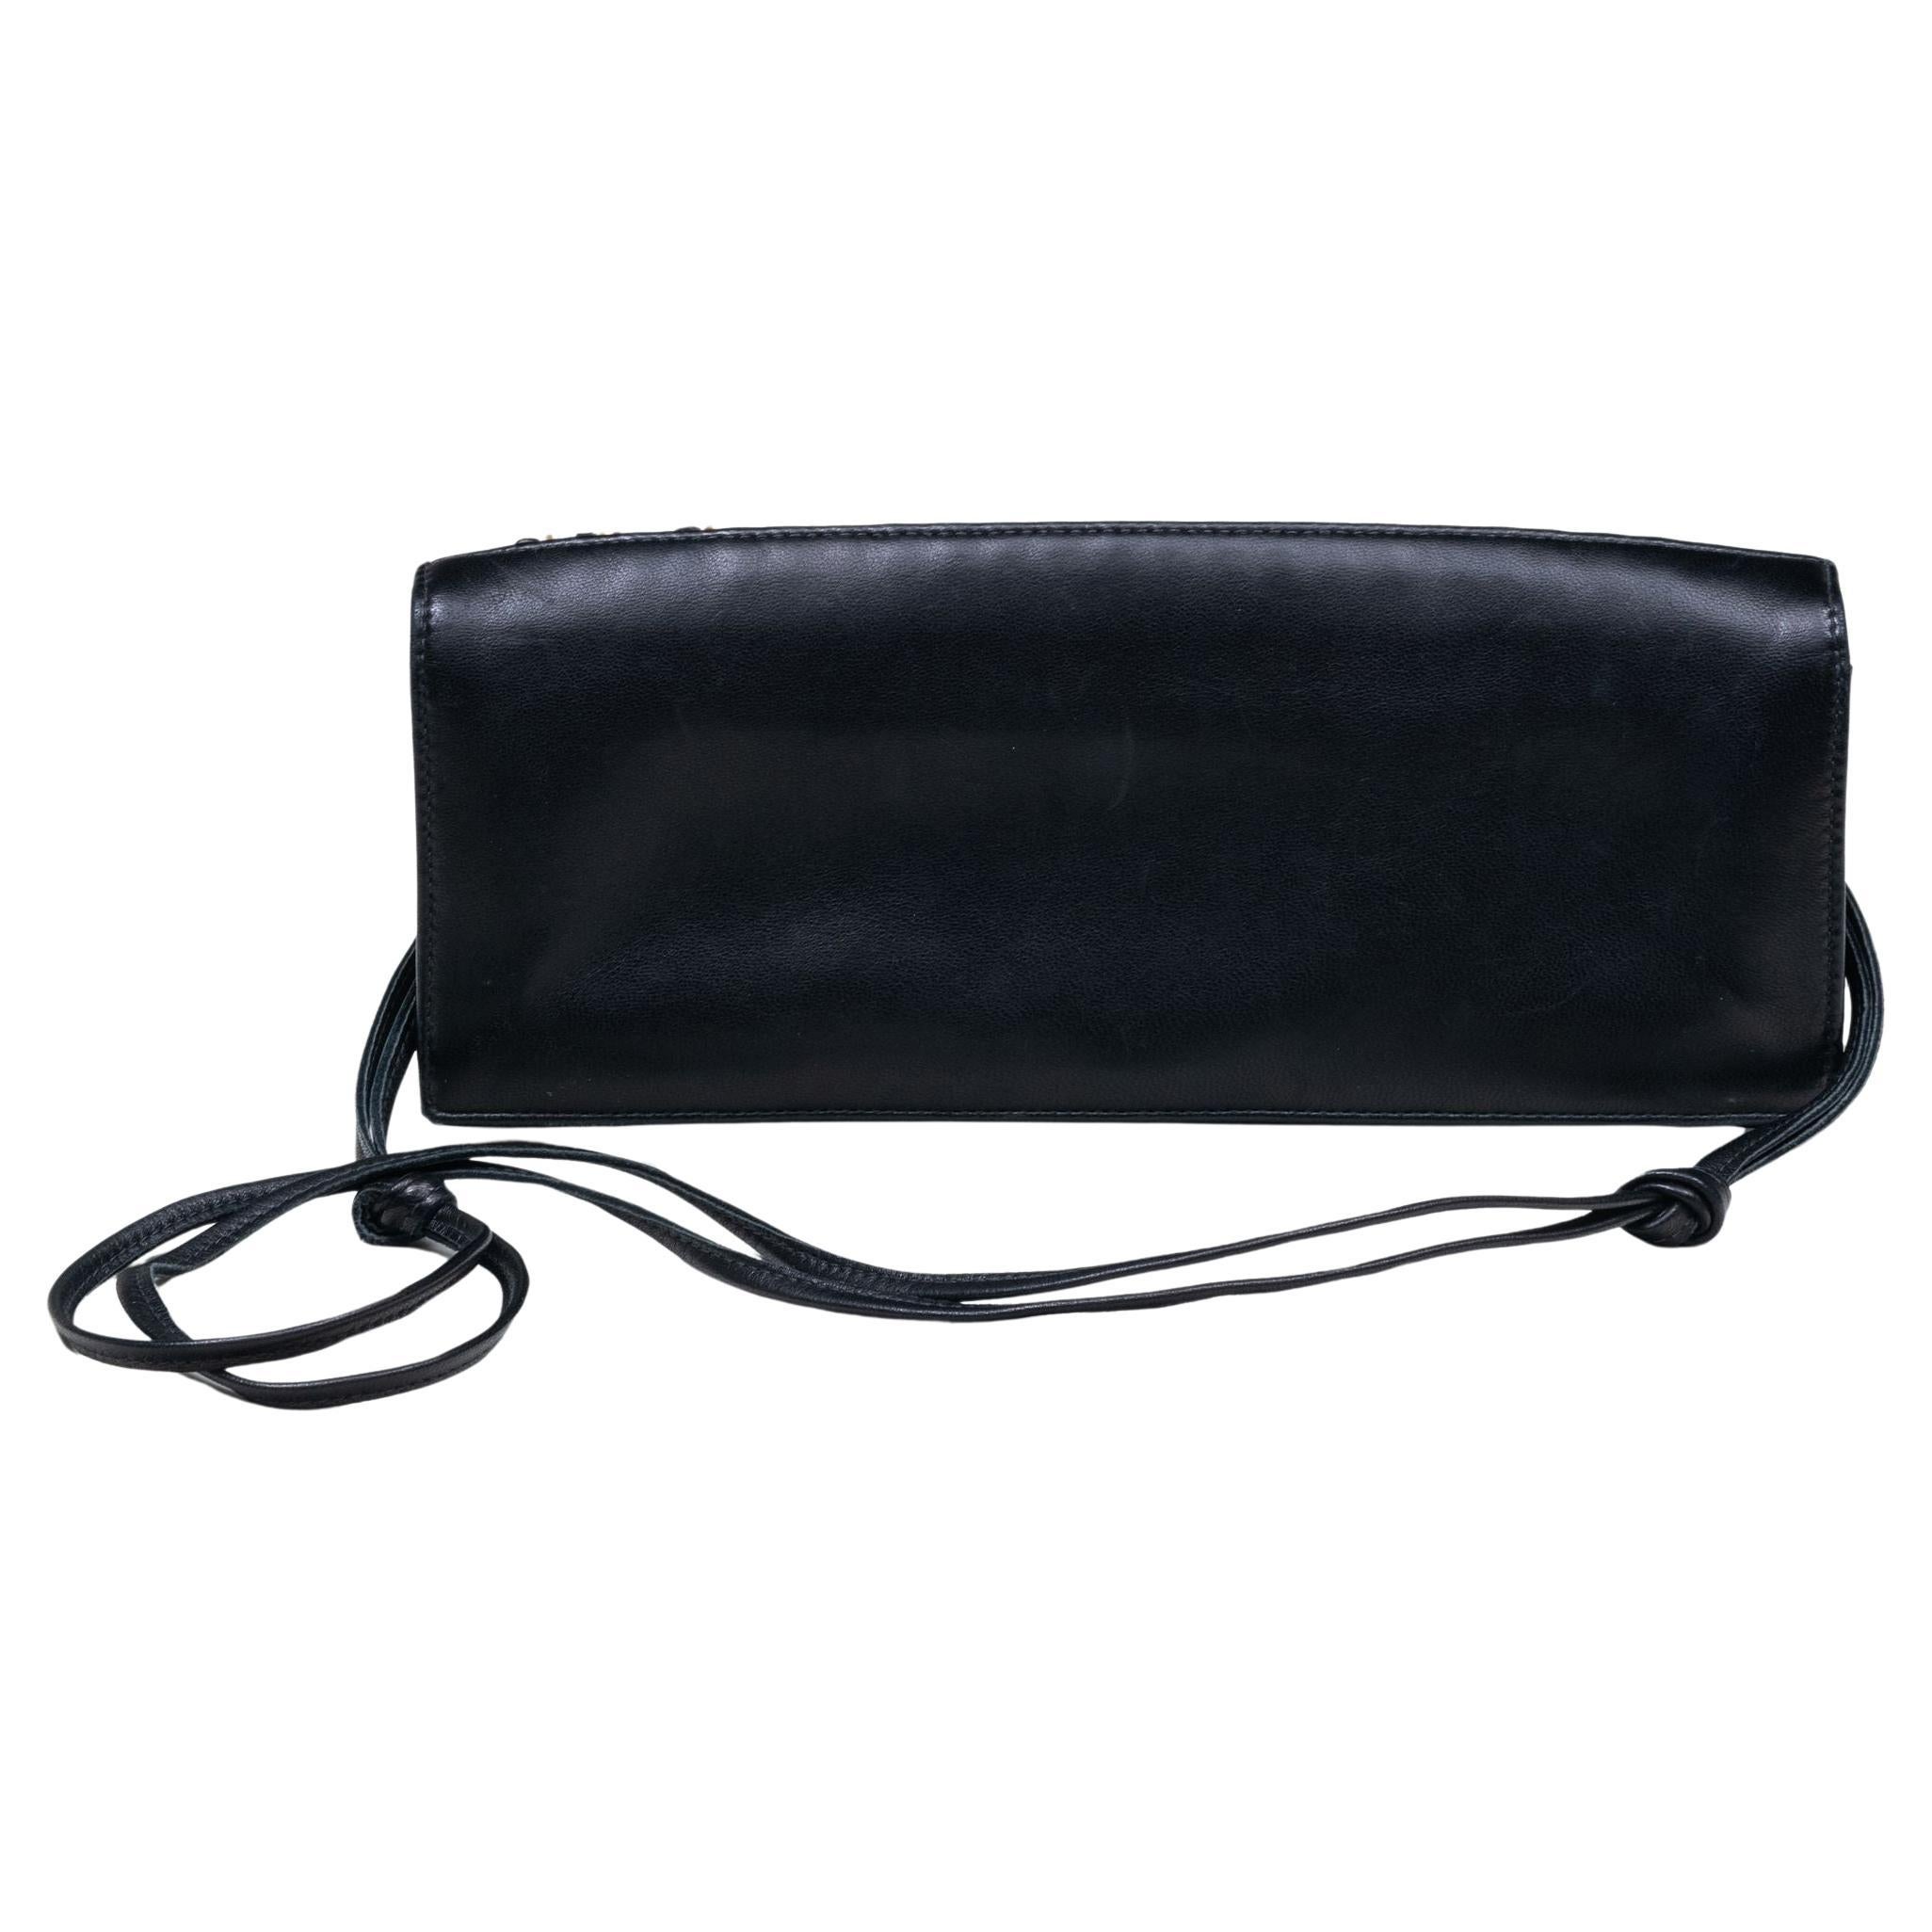 Chanel 2004 Vintage Black Lambskin Chain Embellished Punk Edgy Clutch Flap Bag For Sale 2